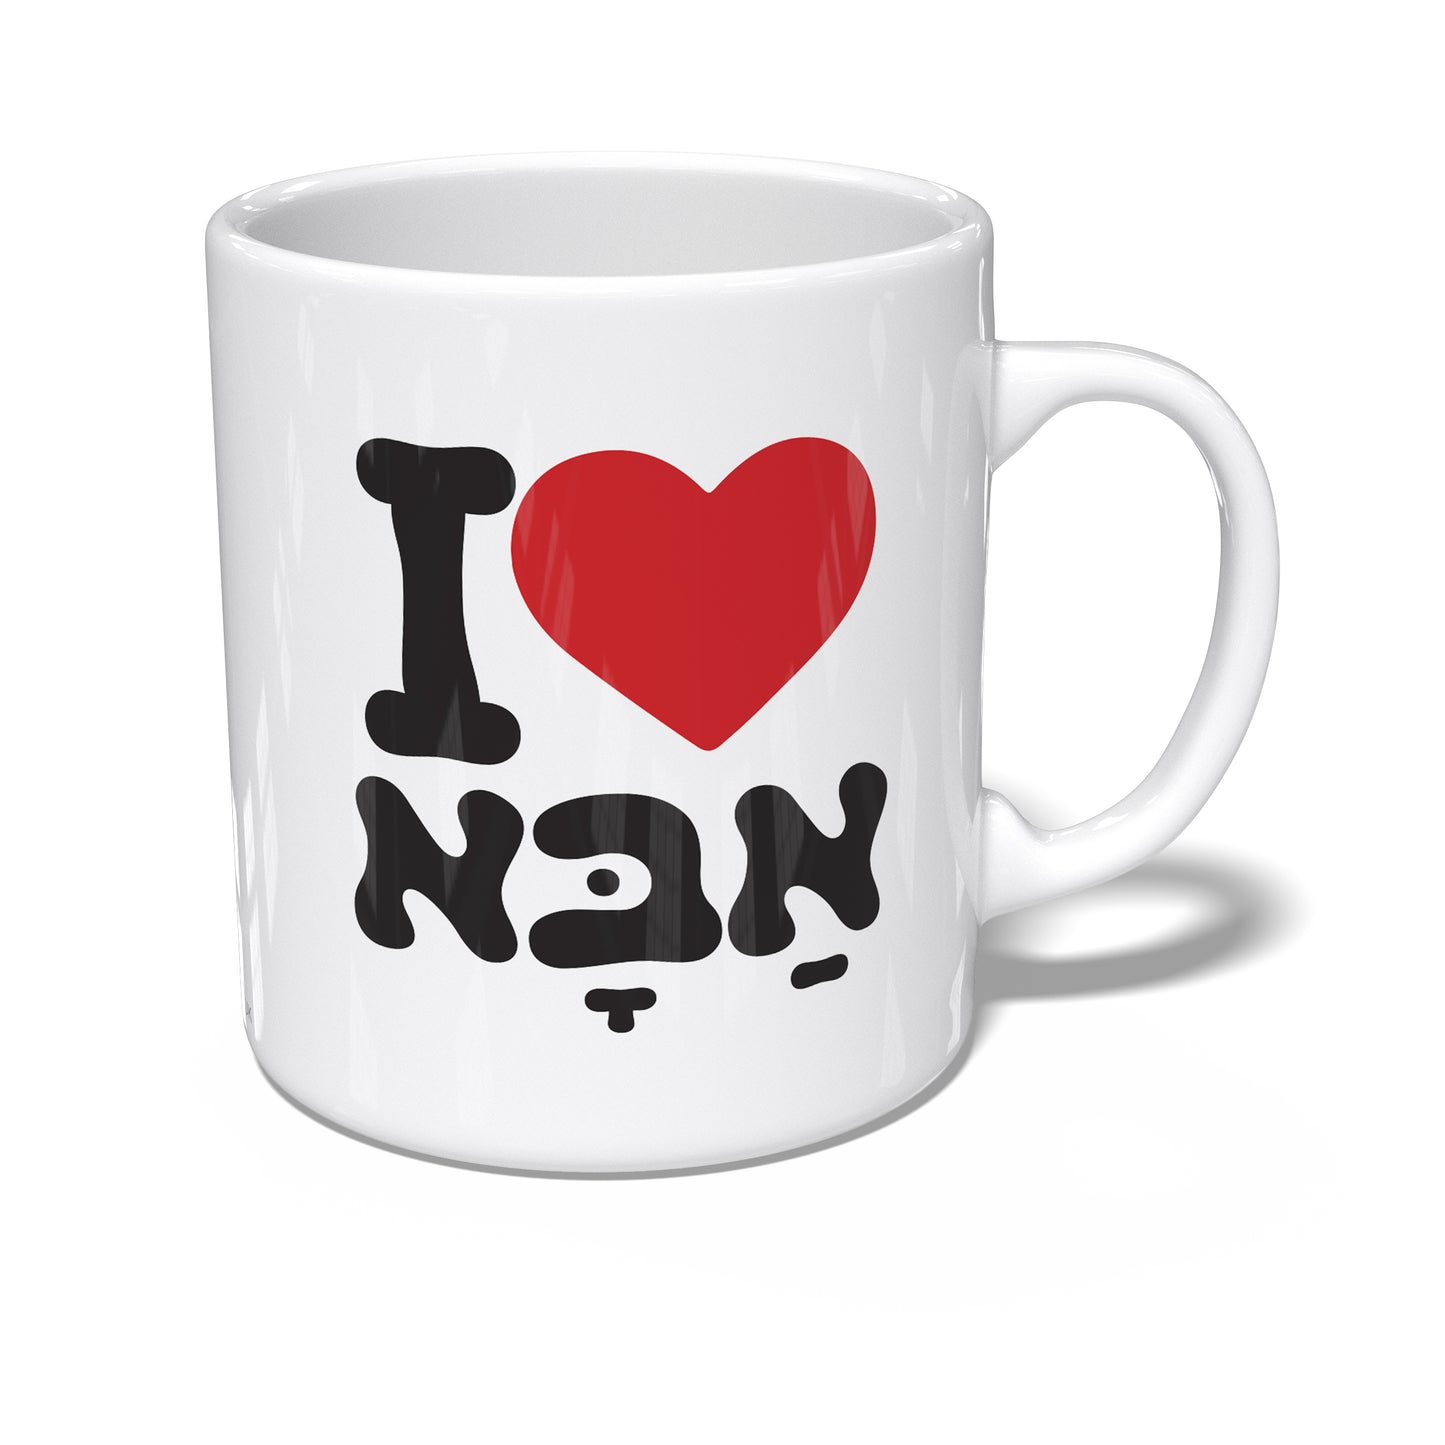 I Love Aba - Mug